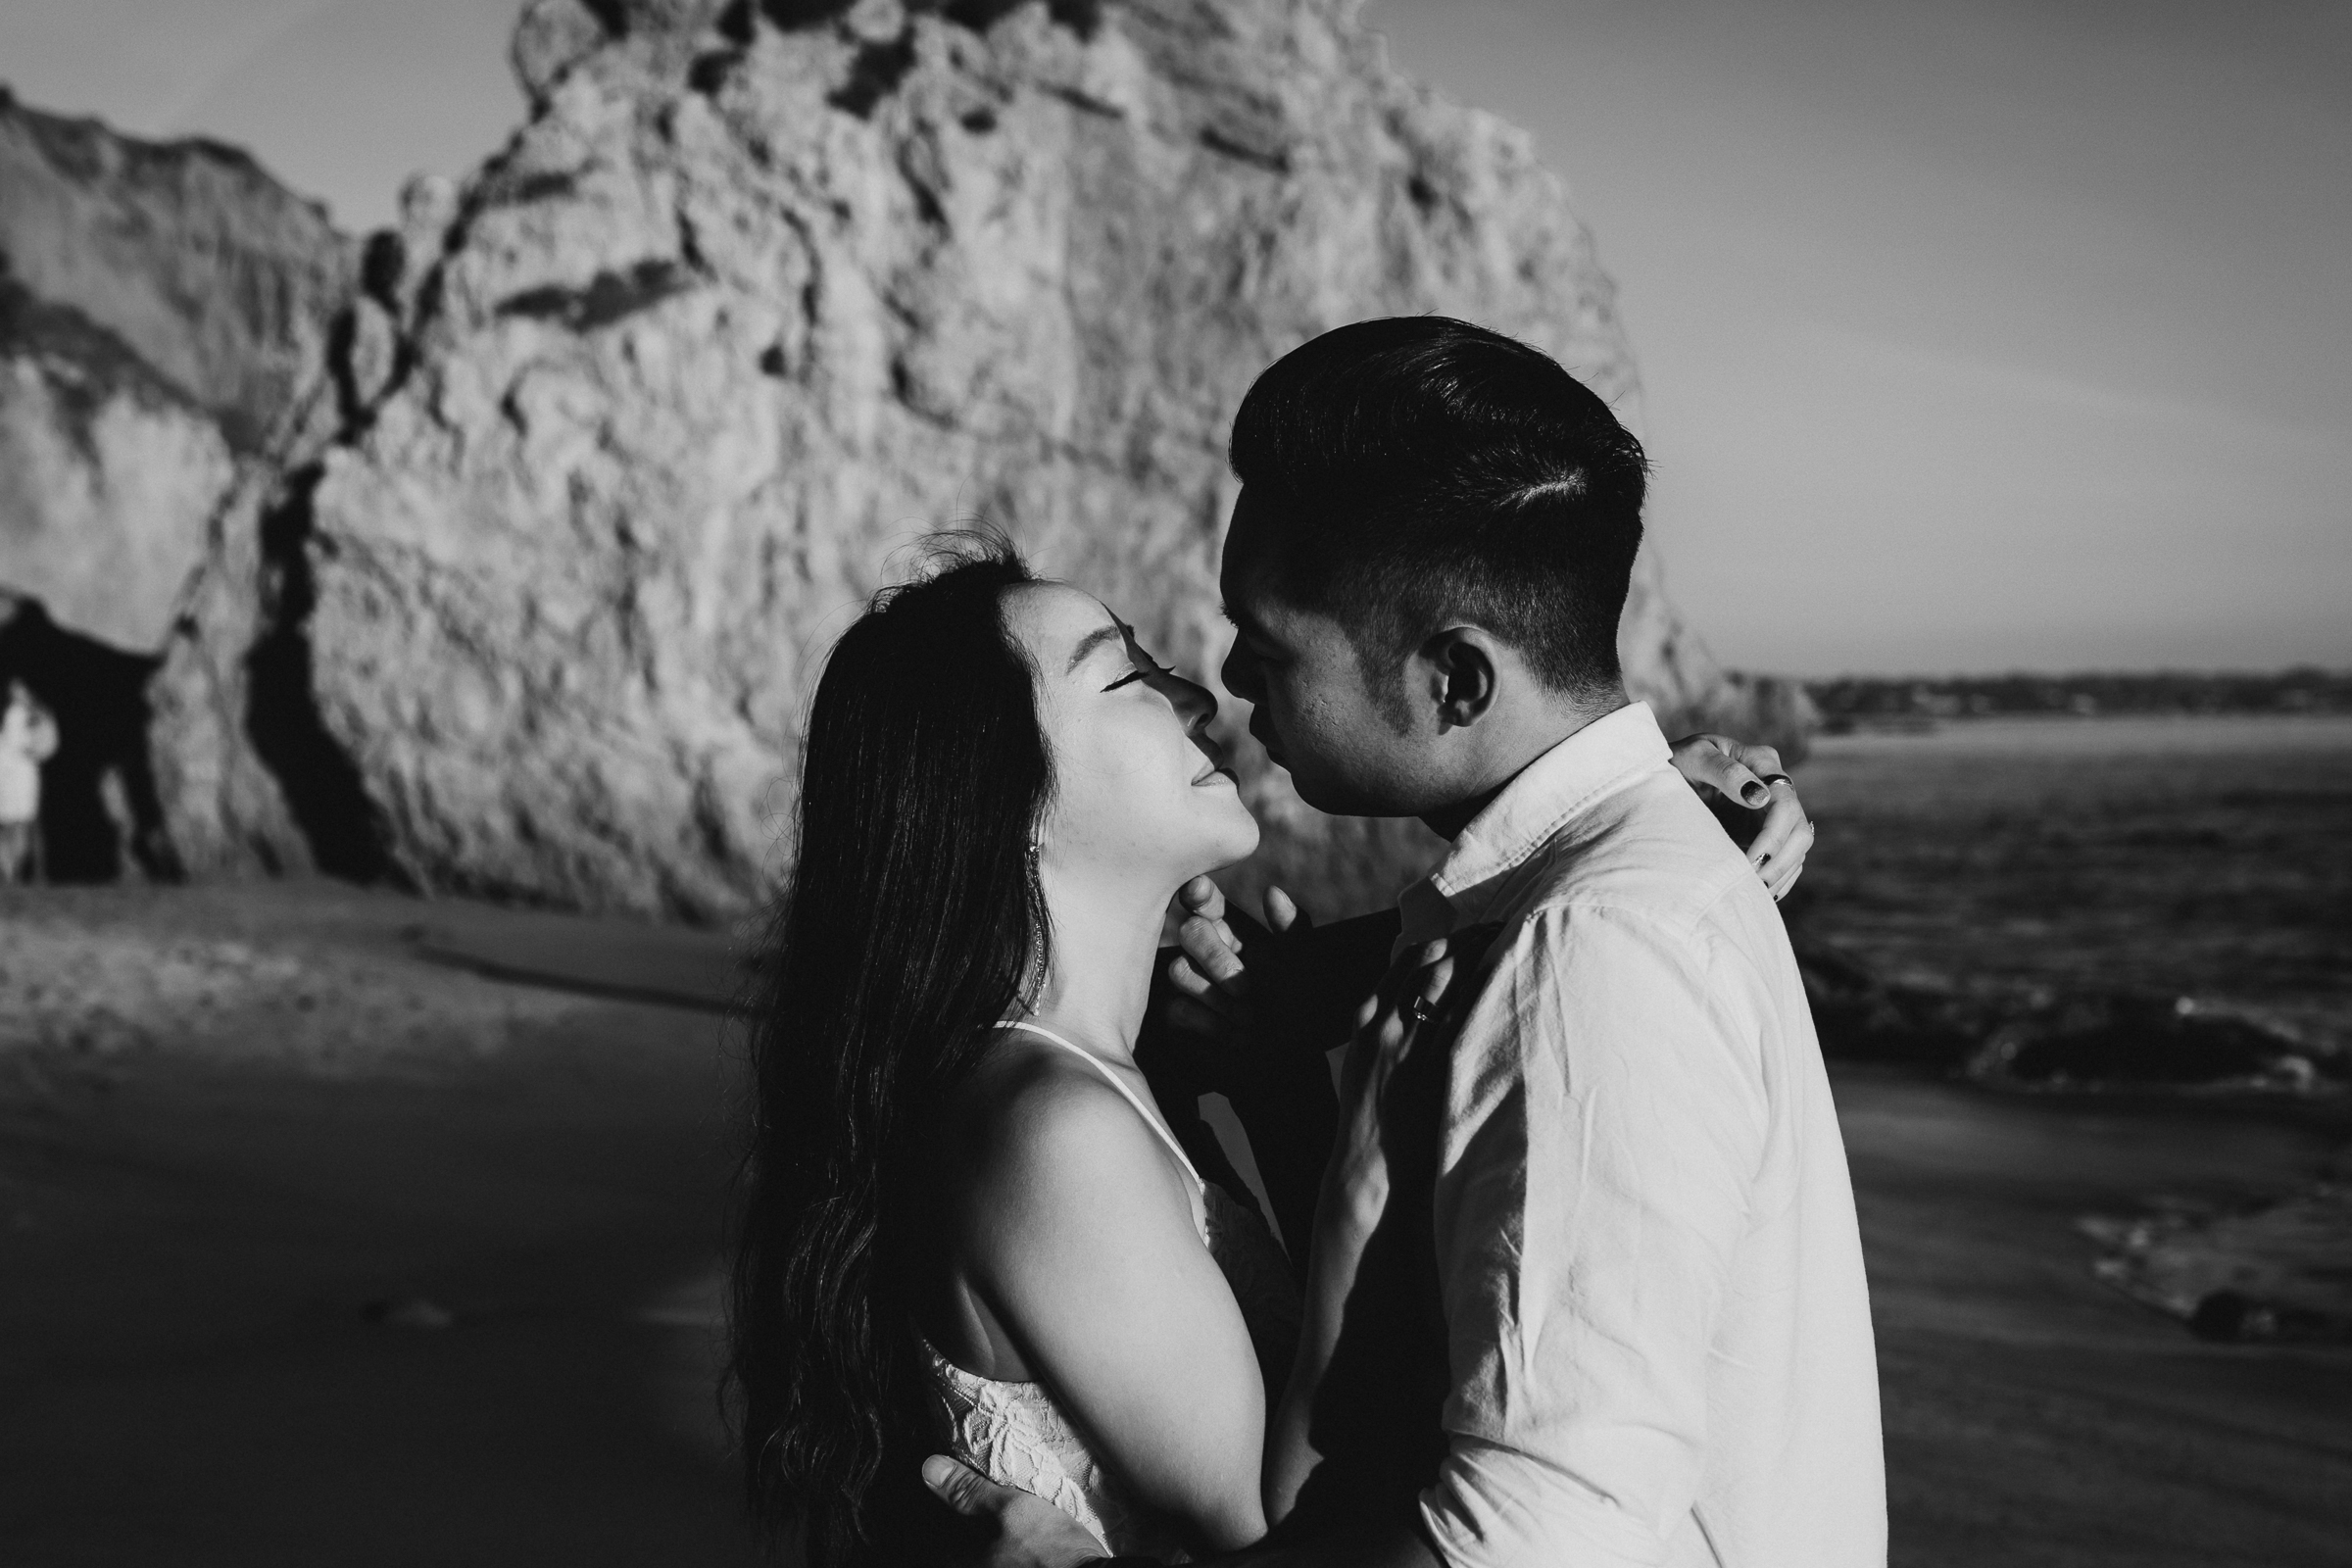 Malibu-El-Matador-State-Beach-Sunset-Engagement-Photos-Los-Angeles-Documentary-Wedding-Photographer-3.jpg